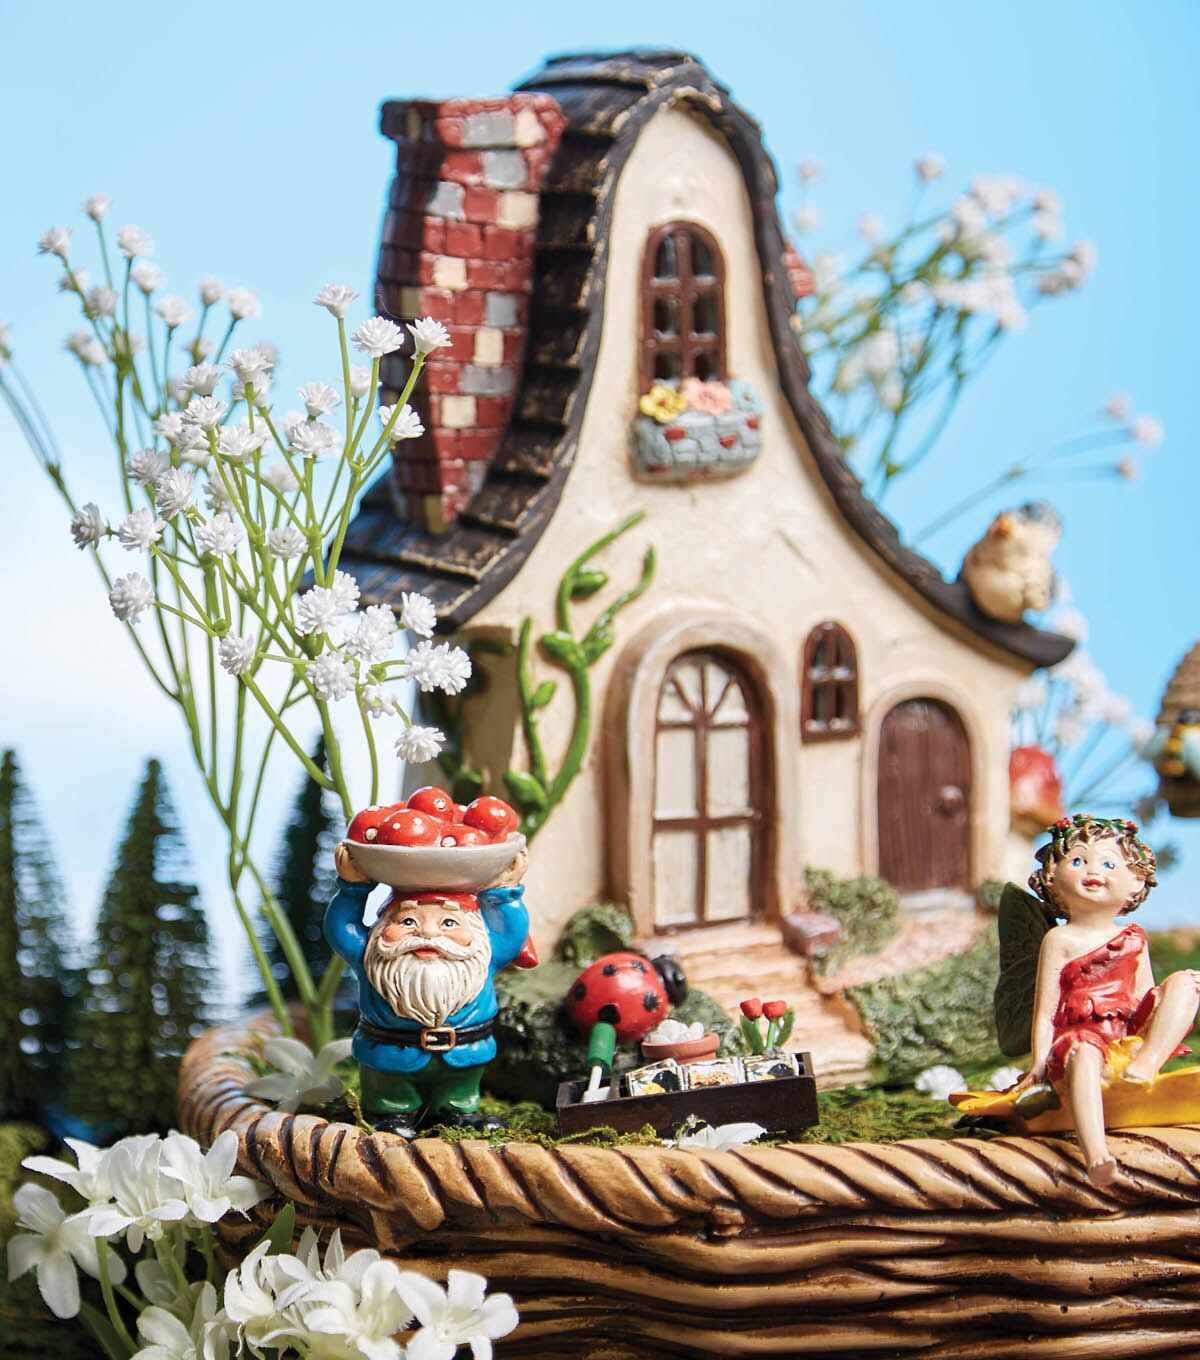 How To Make A Basket Gnomes Fairy Garden Joann